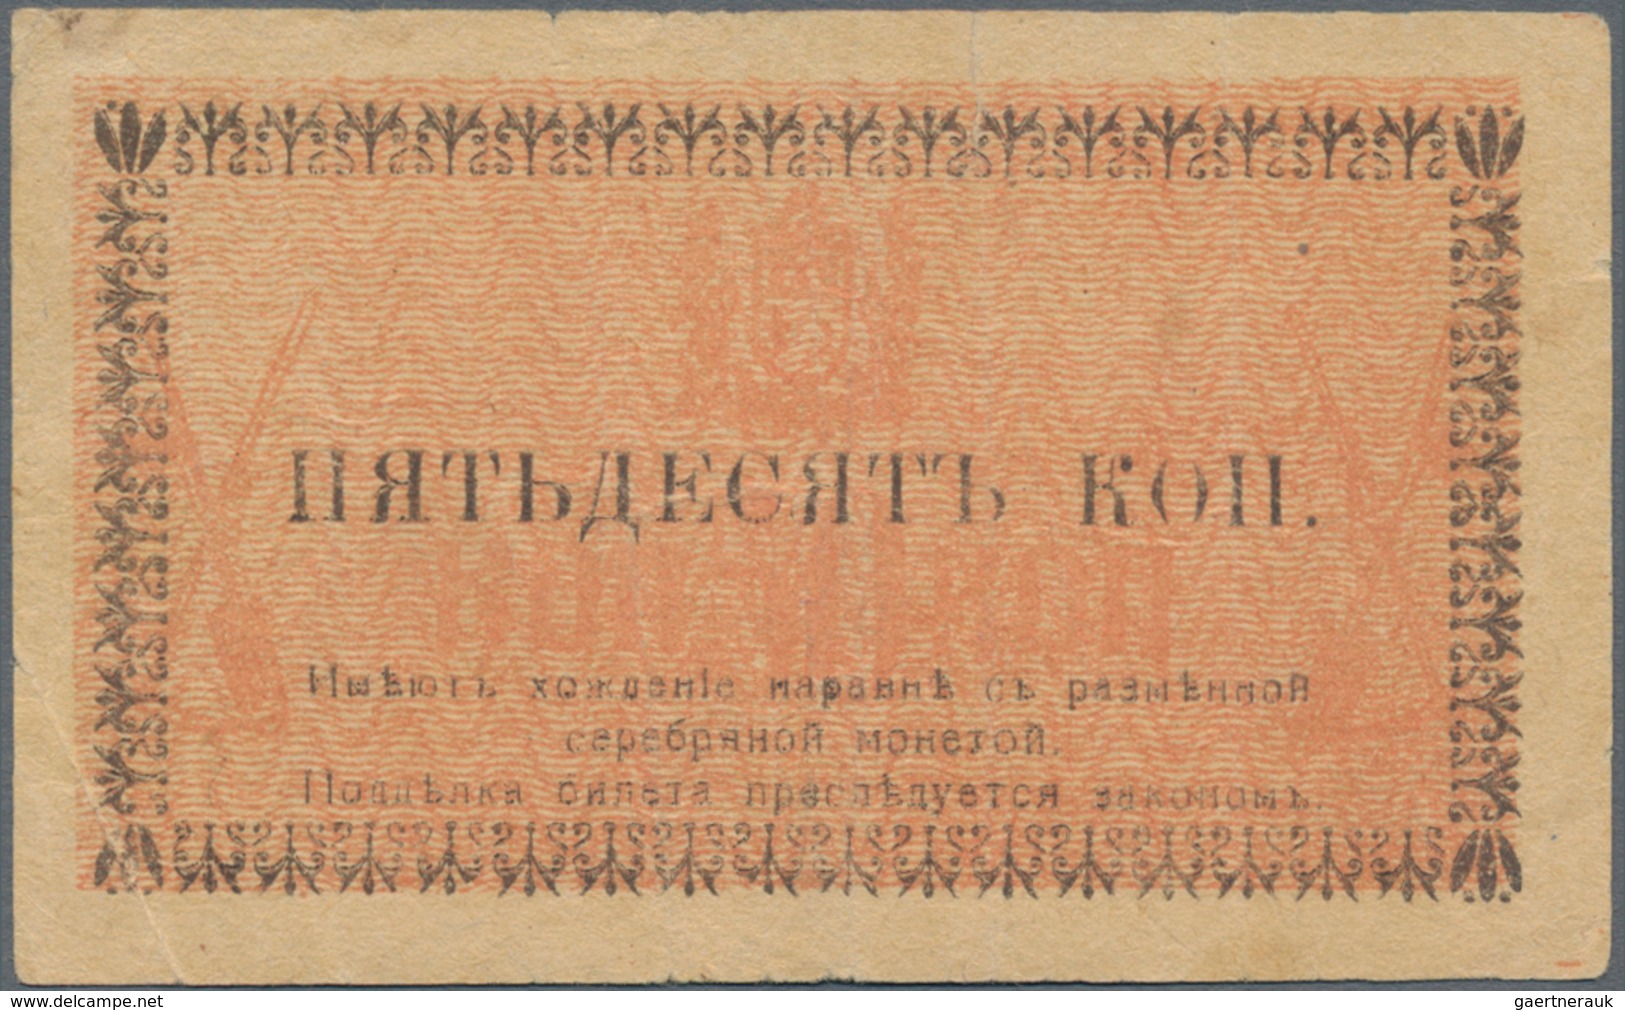 Russia / Russland: Central Asia - Semireche Region 50 Kopeks ND(1918), P.S1117a (R. 20601, K. 2b), D - Russia